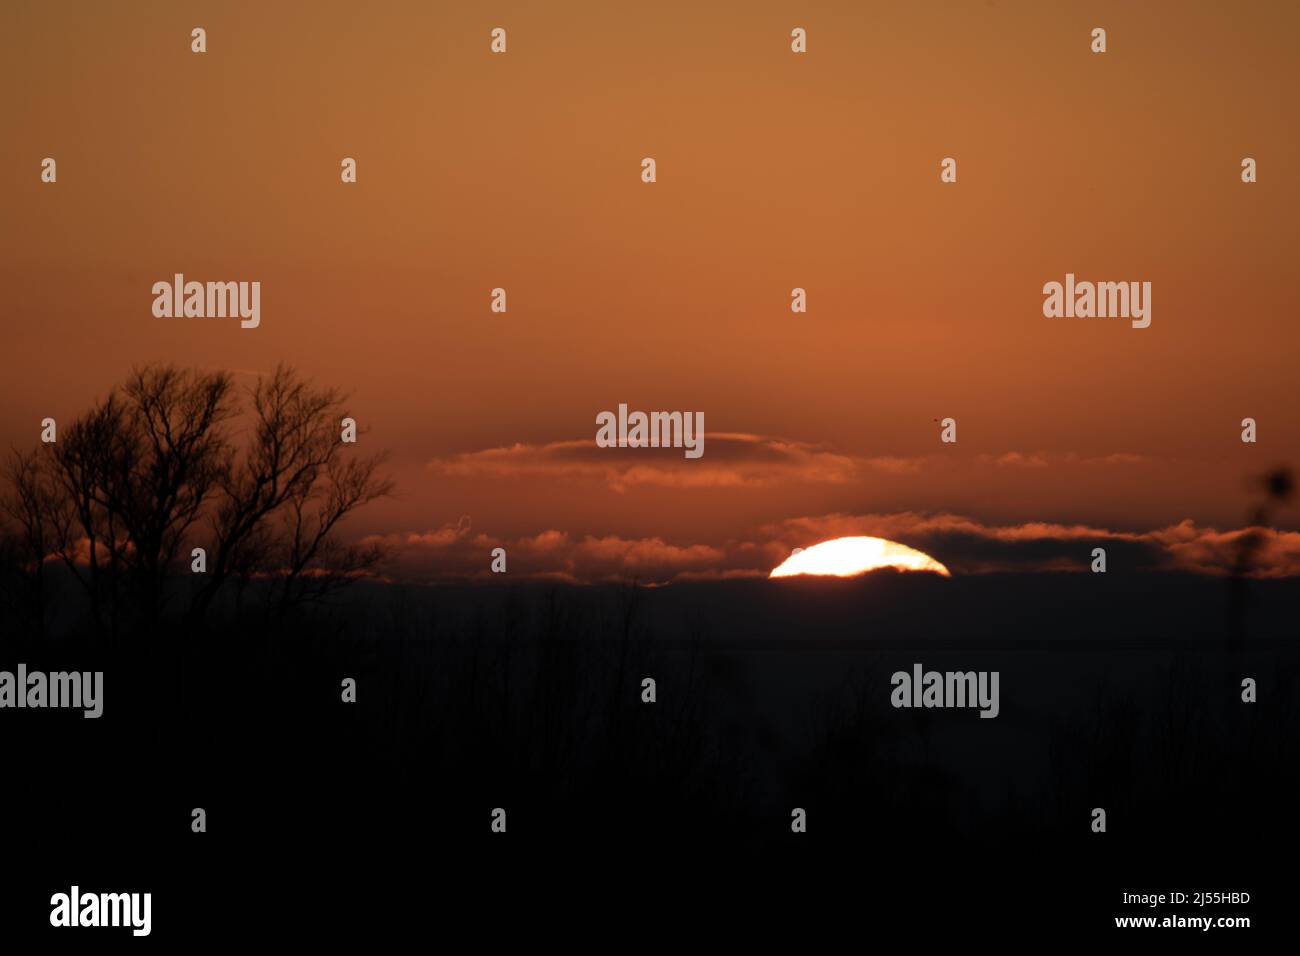 Letzte Momente des Sonnenuntergangs - große Sonne Stockfoto